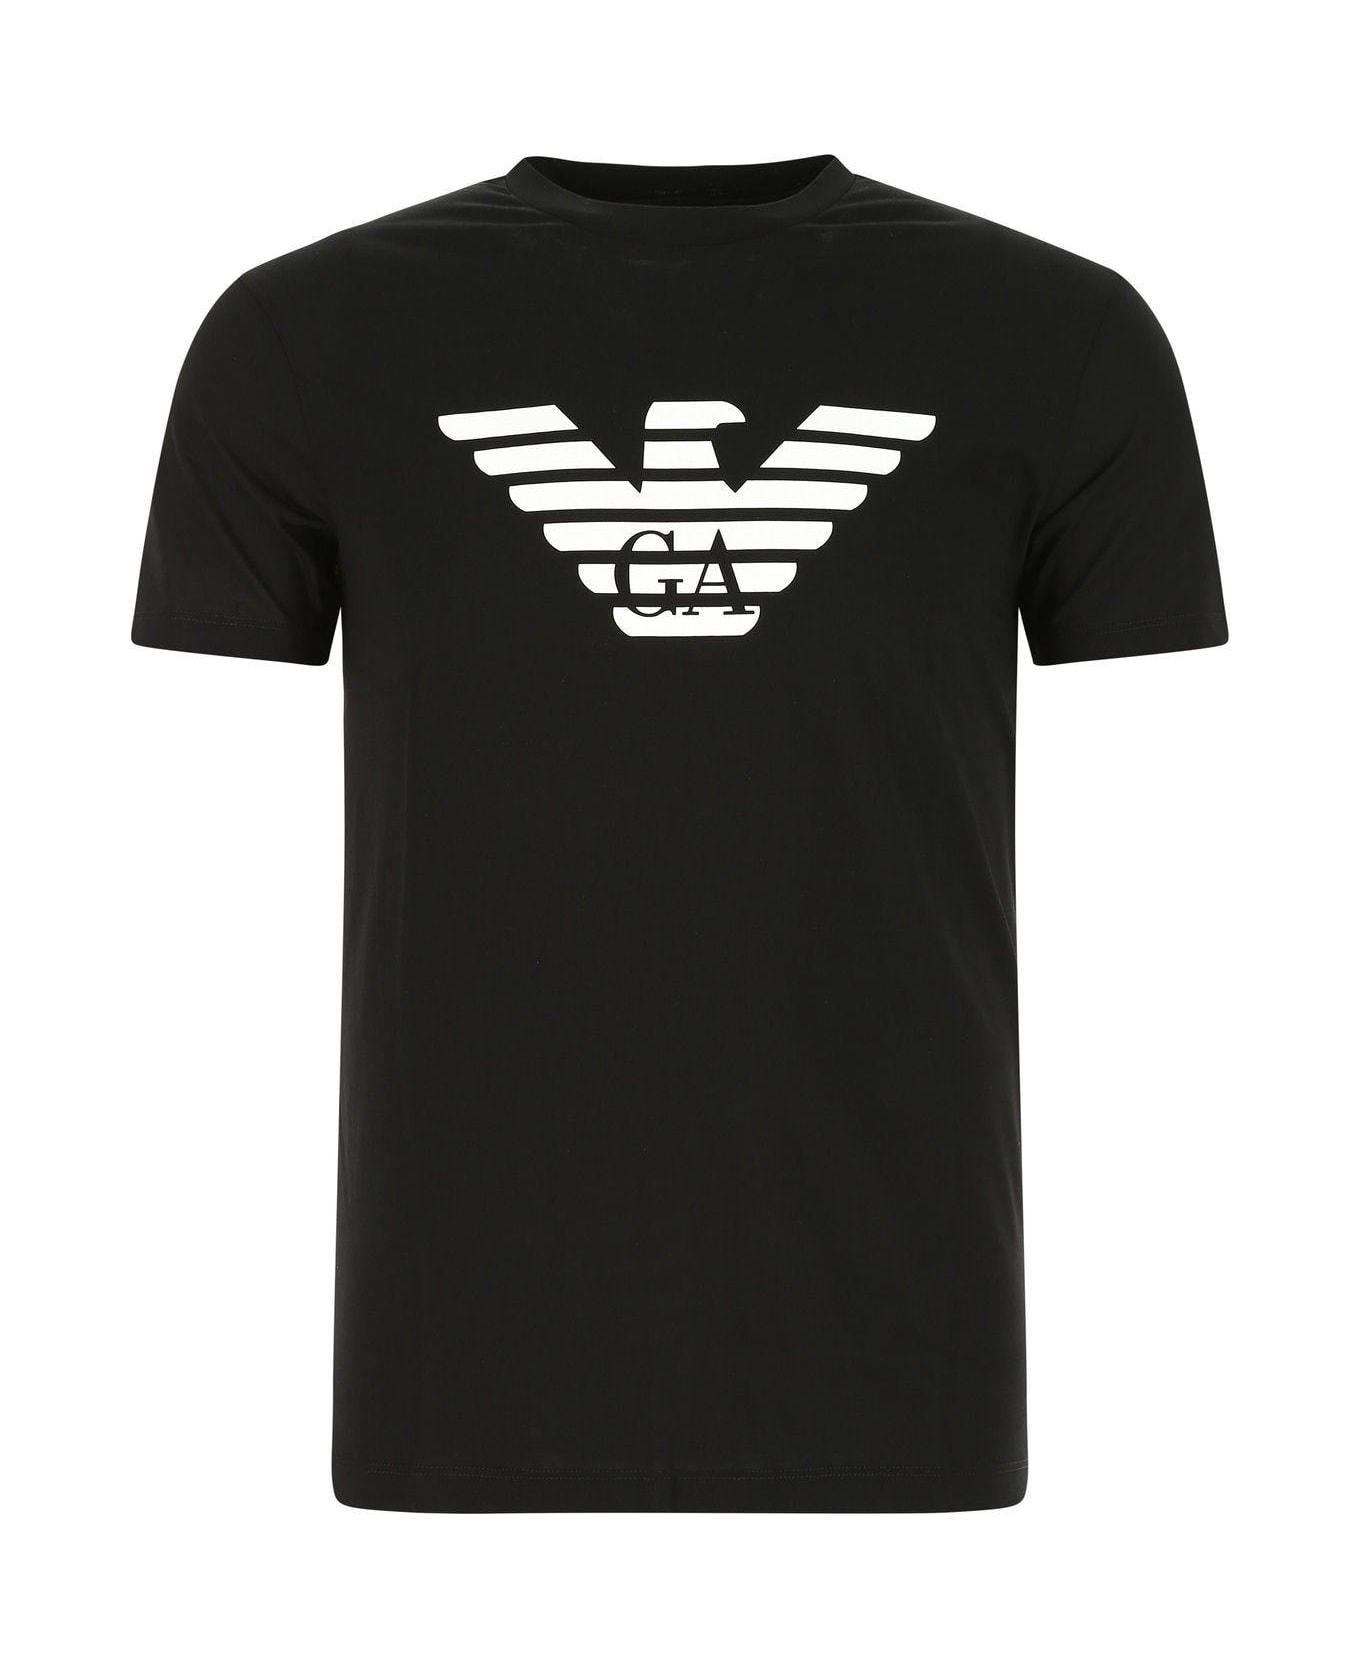 Emporio Armani Black Cotton T-shirt - Black シャツ